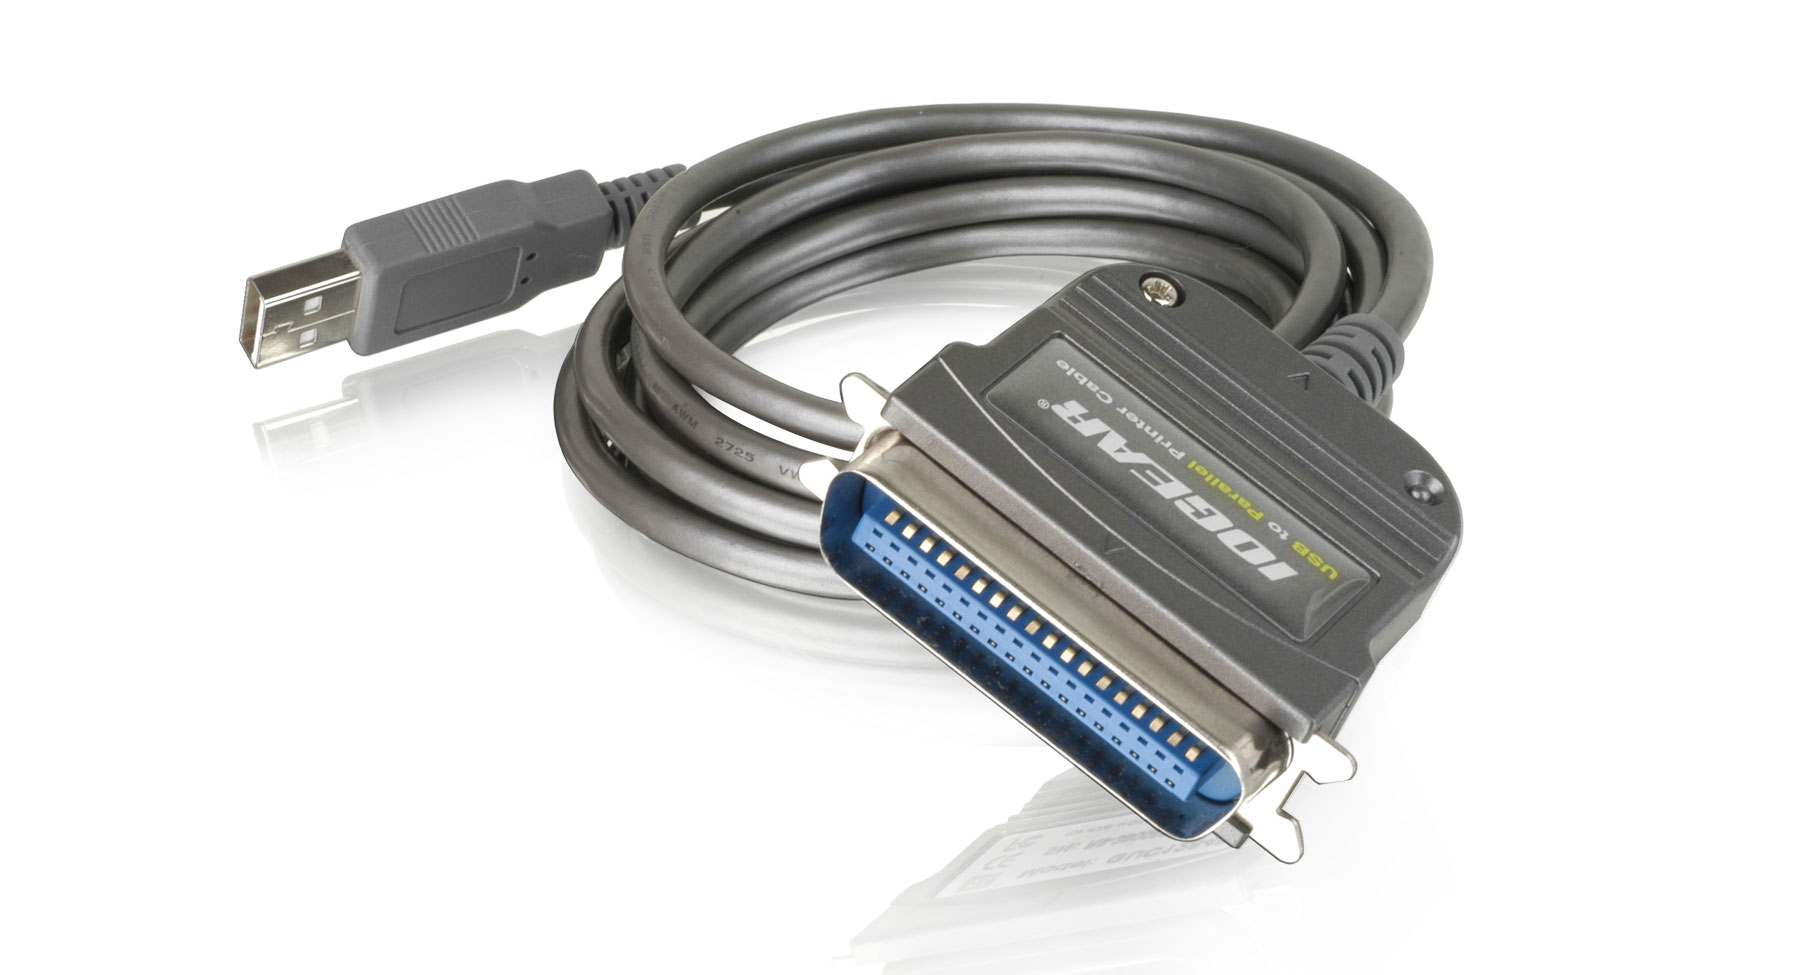 IOGEAR - USB to Parallel IEEE Adapter